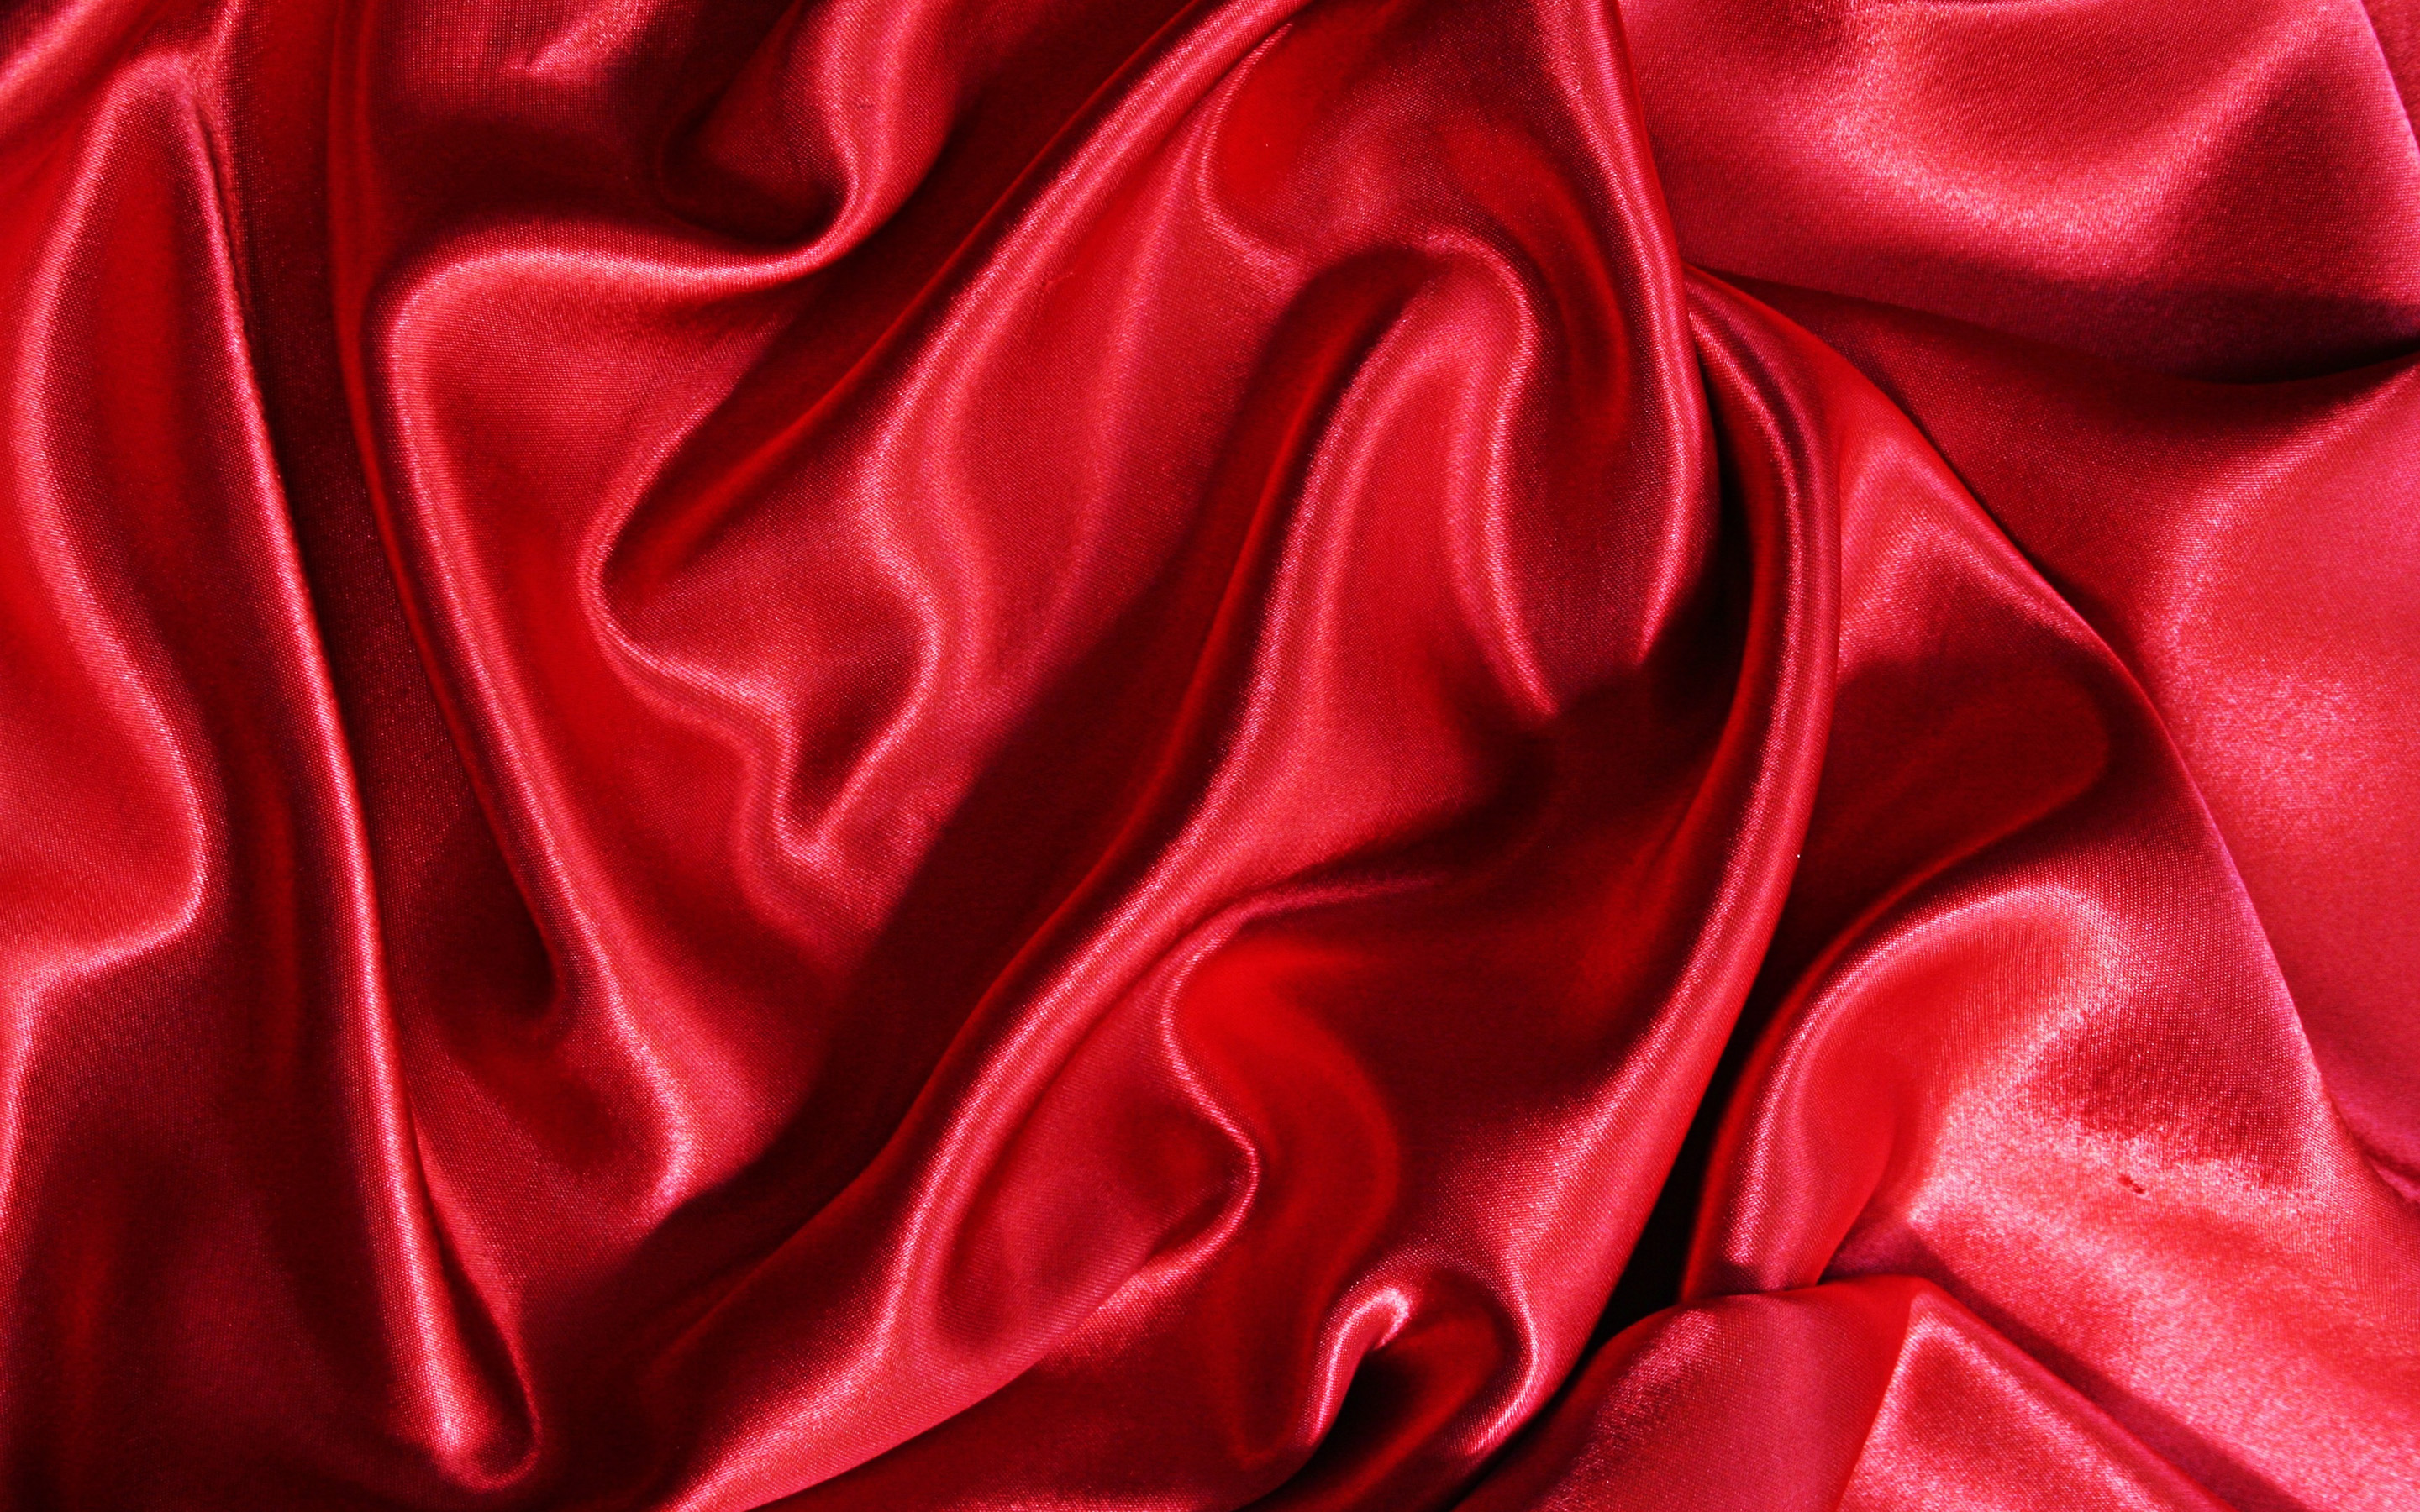 Fondo De Tela De Tela De Color Rojo Oscuro De Textura De Poliéster, Tela  Roja, Textura De Seda, Fondo De Seda Imagen de Fondo Para Descarga Gratuita  - Pngtreee